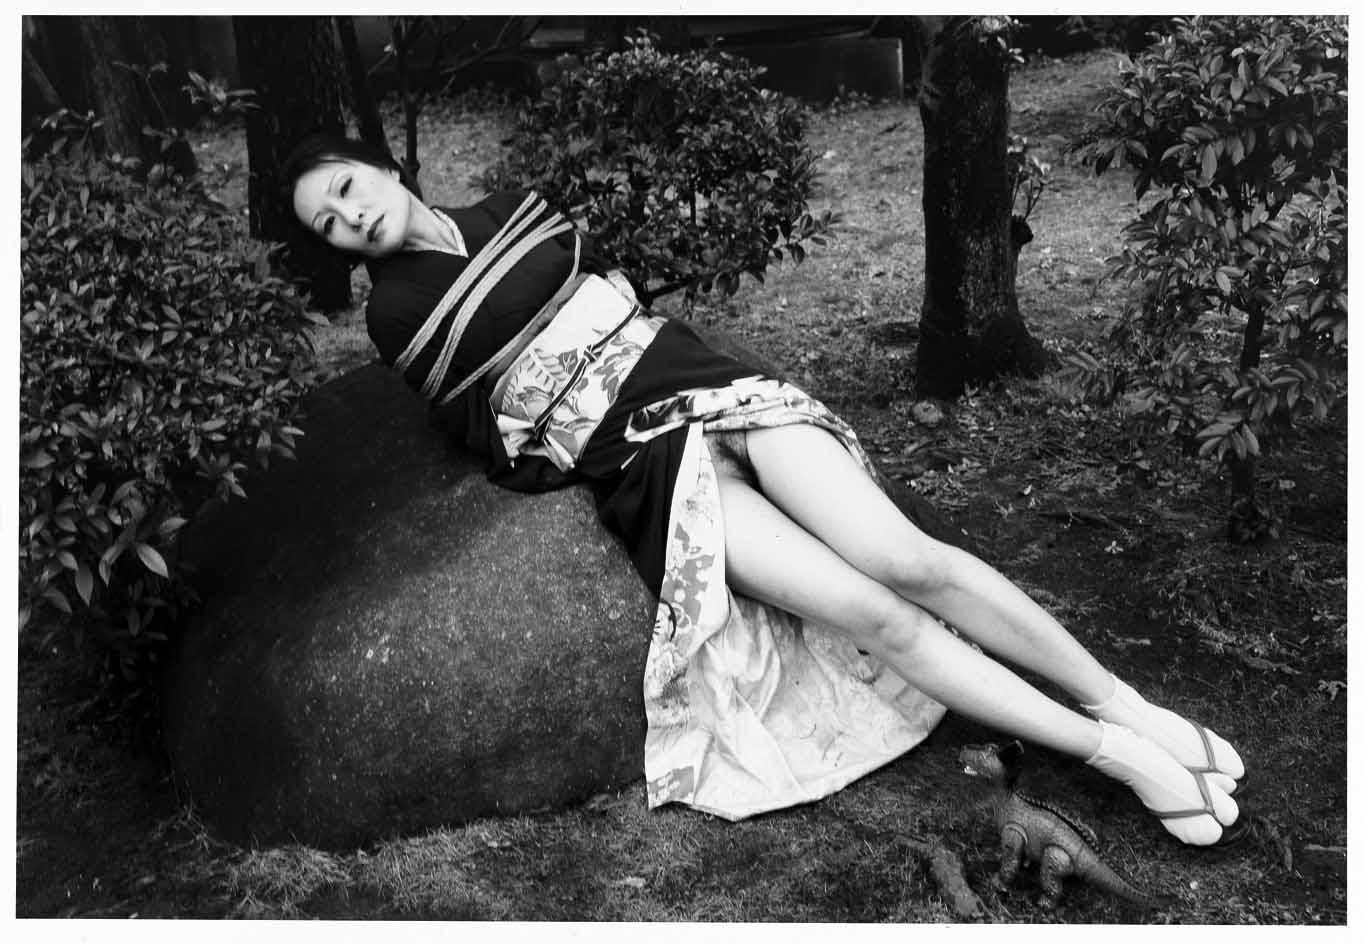 69YK #41 - Nobuyoshi Araki, Japanische Fotografie, Akt, Schwarz-Weiß, Kunst